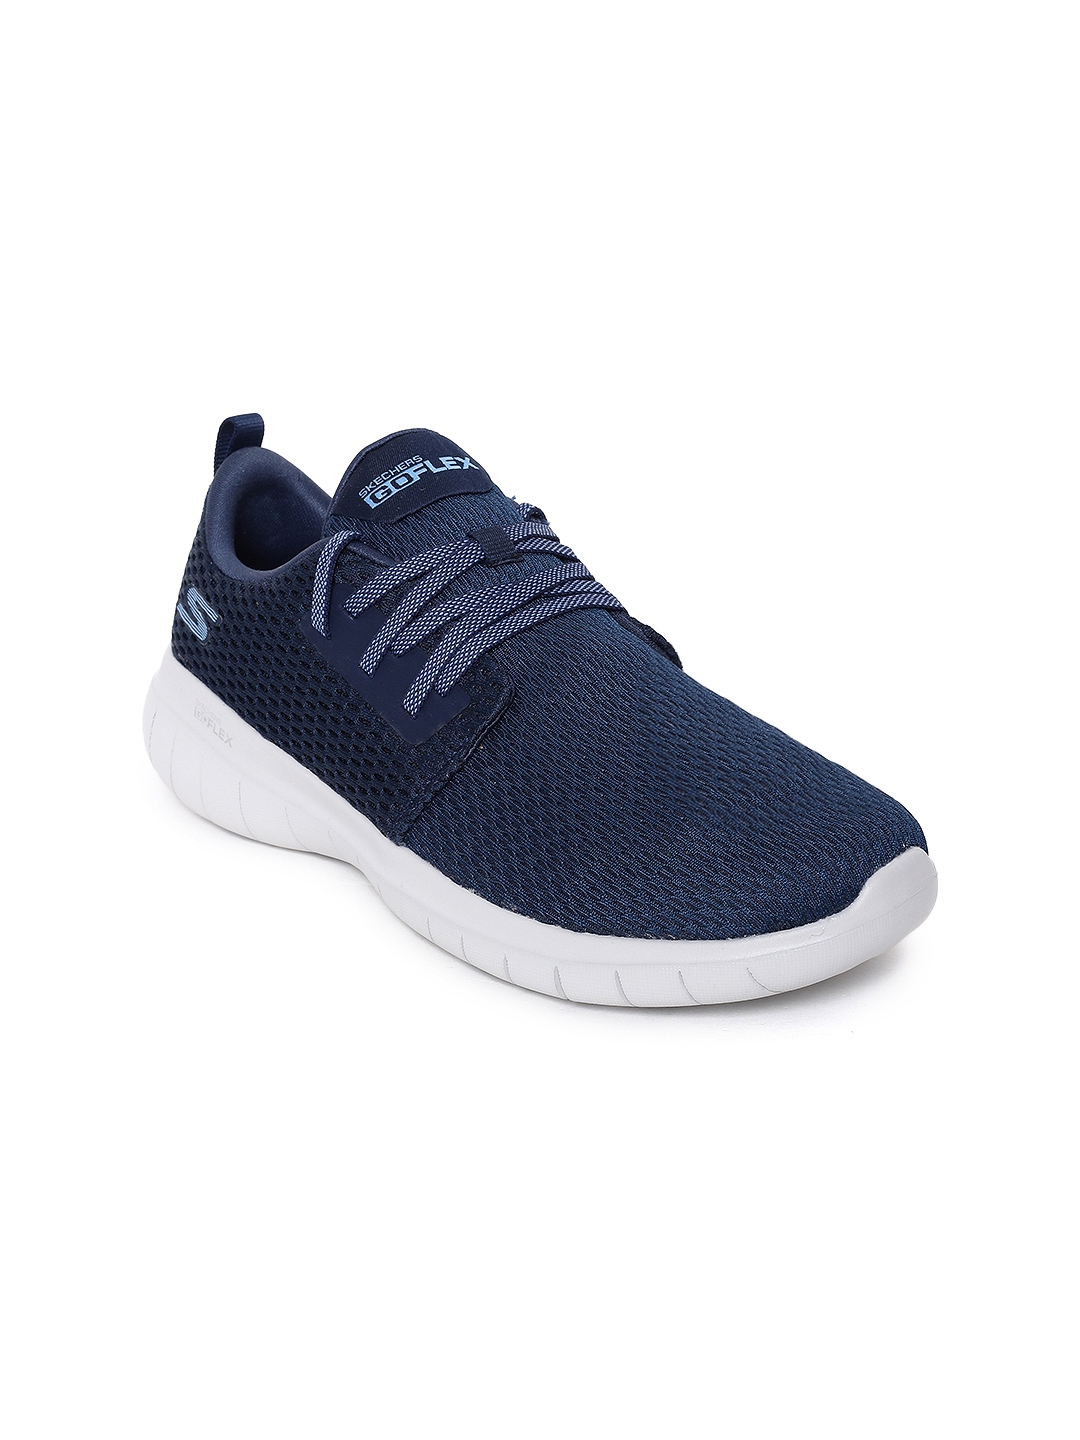 skechers navy blue running shoes